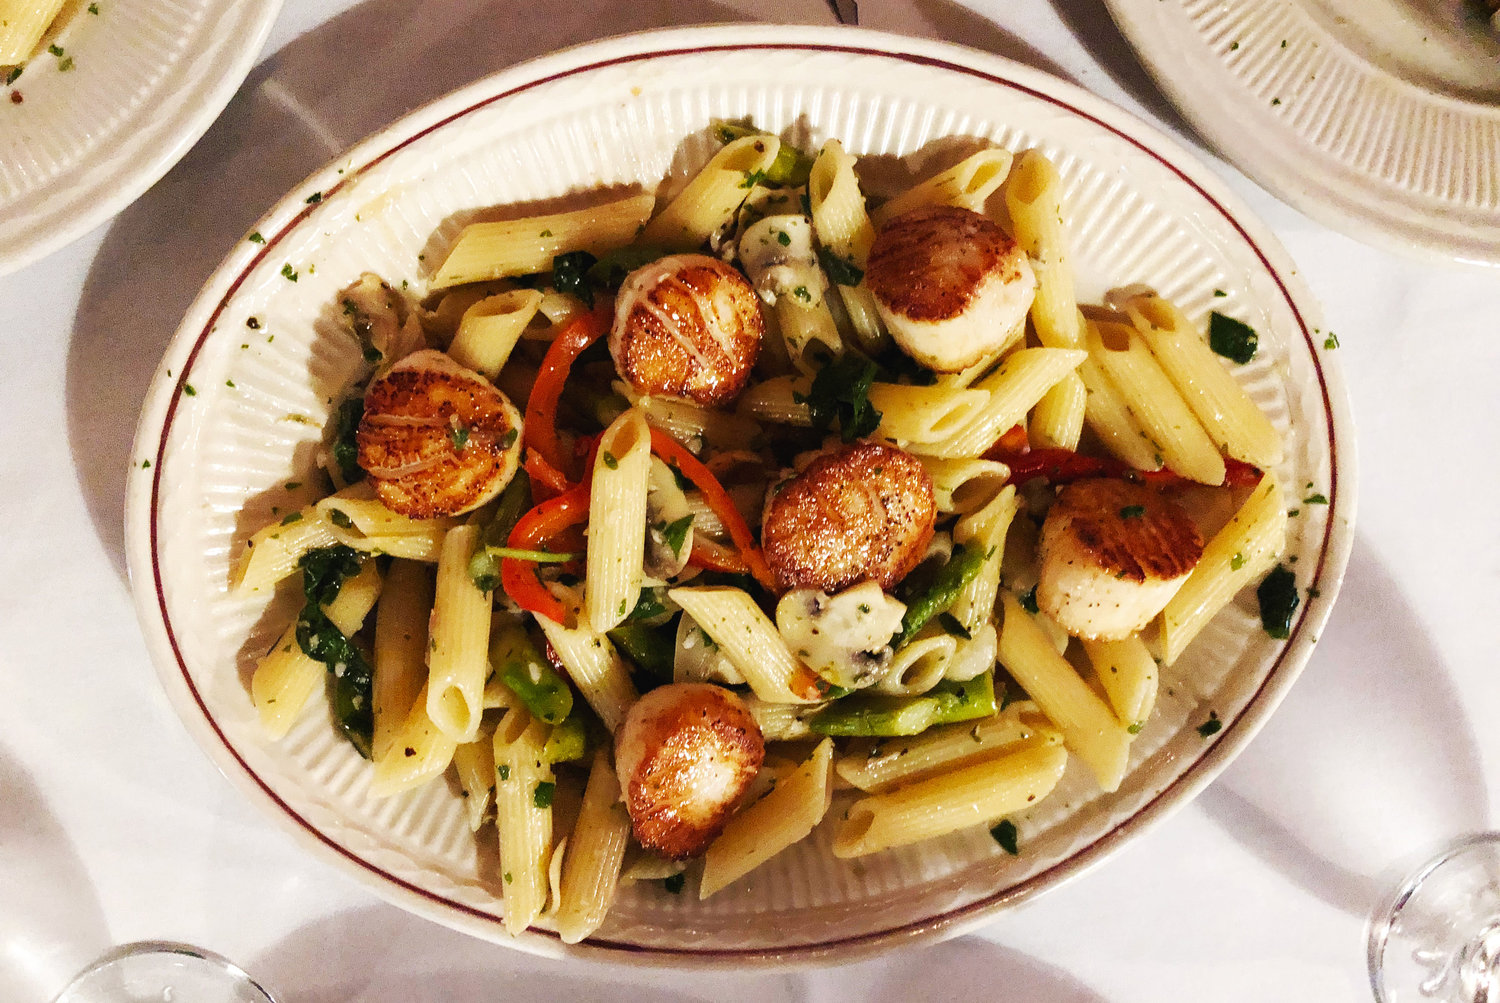 Pasta primavera with scallops